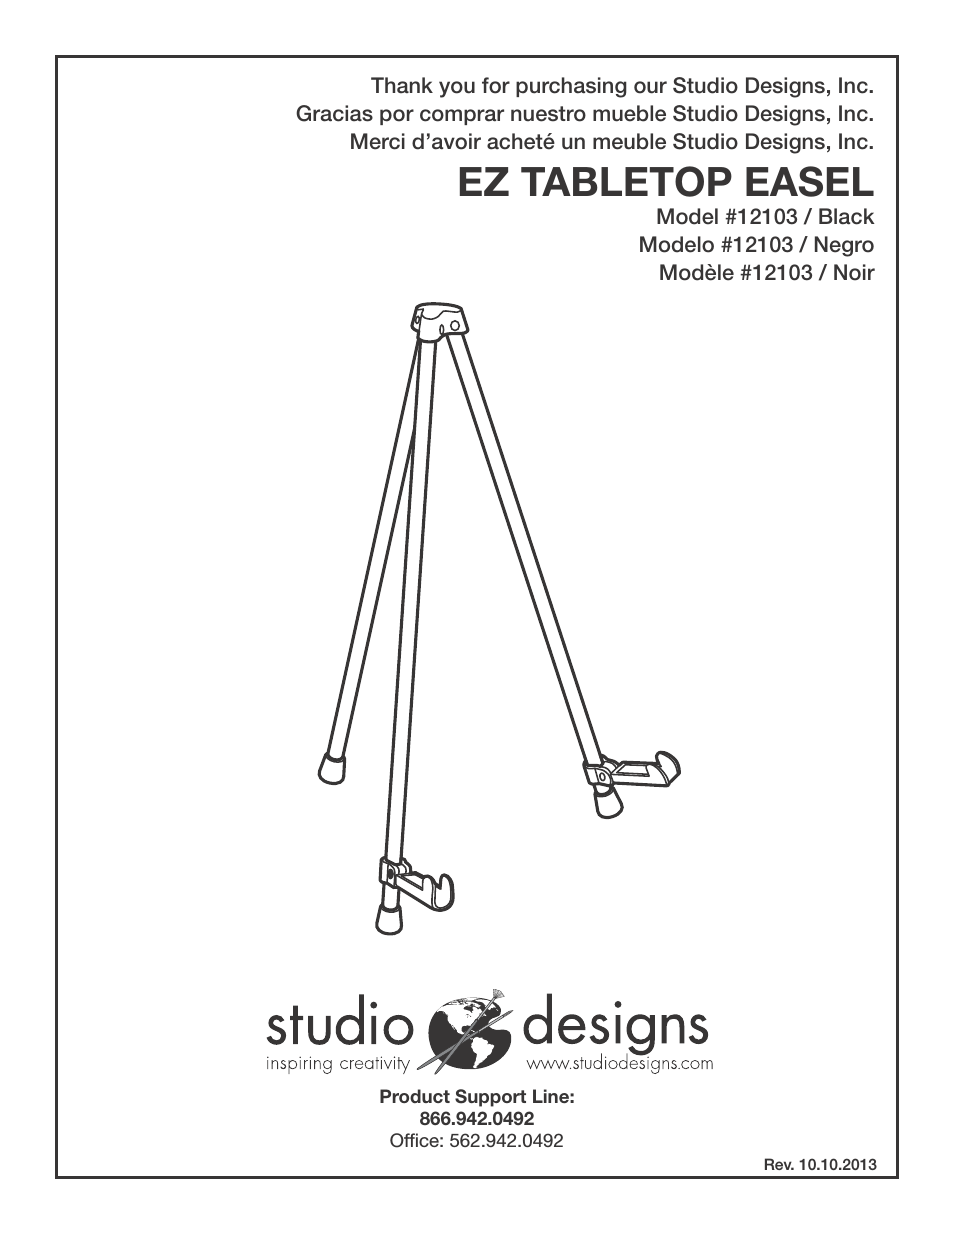 EZ Tabletop Easel